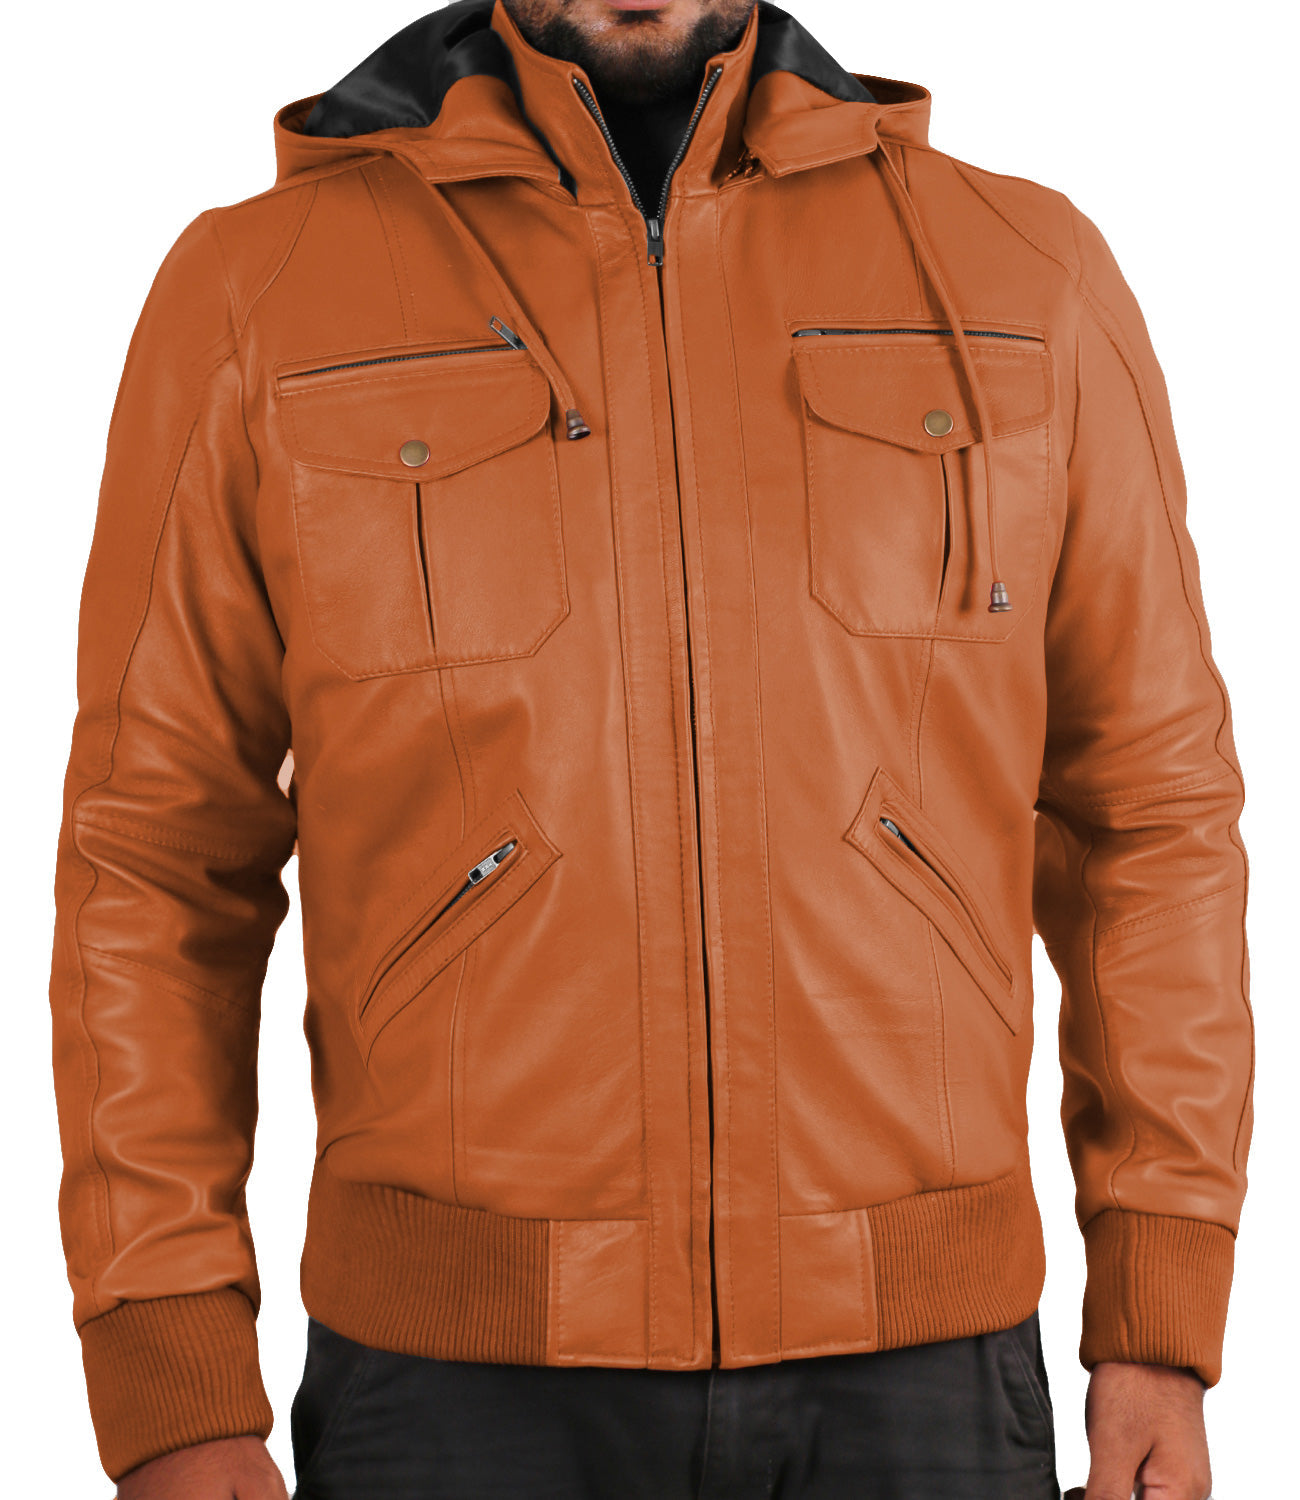 Leather Jackets Hub Mens Genuine Lambskin Leather Jacket (Black, Regal Jacket) - 1501270